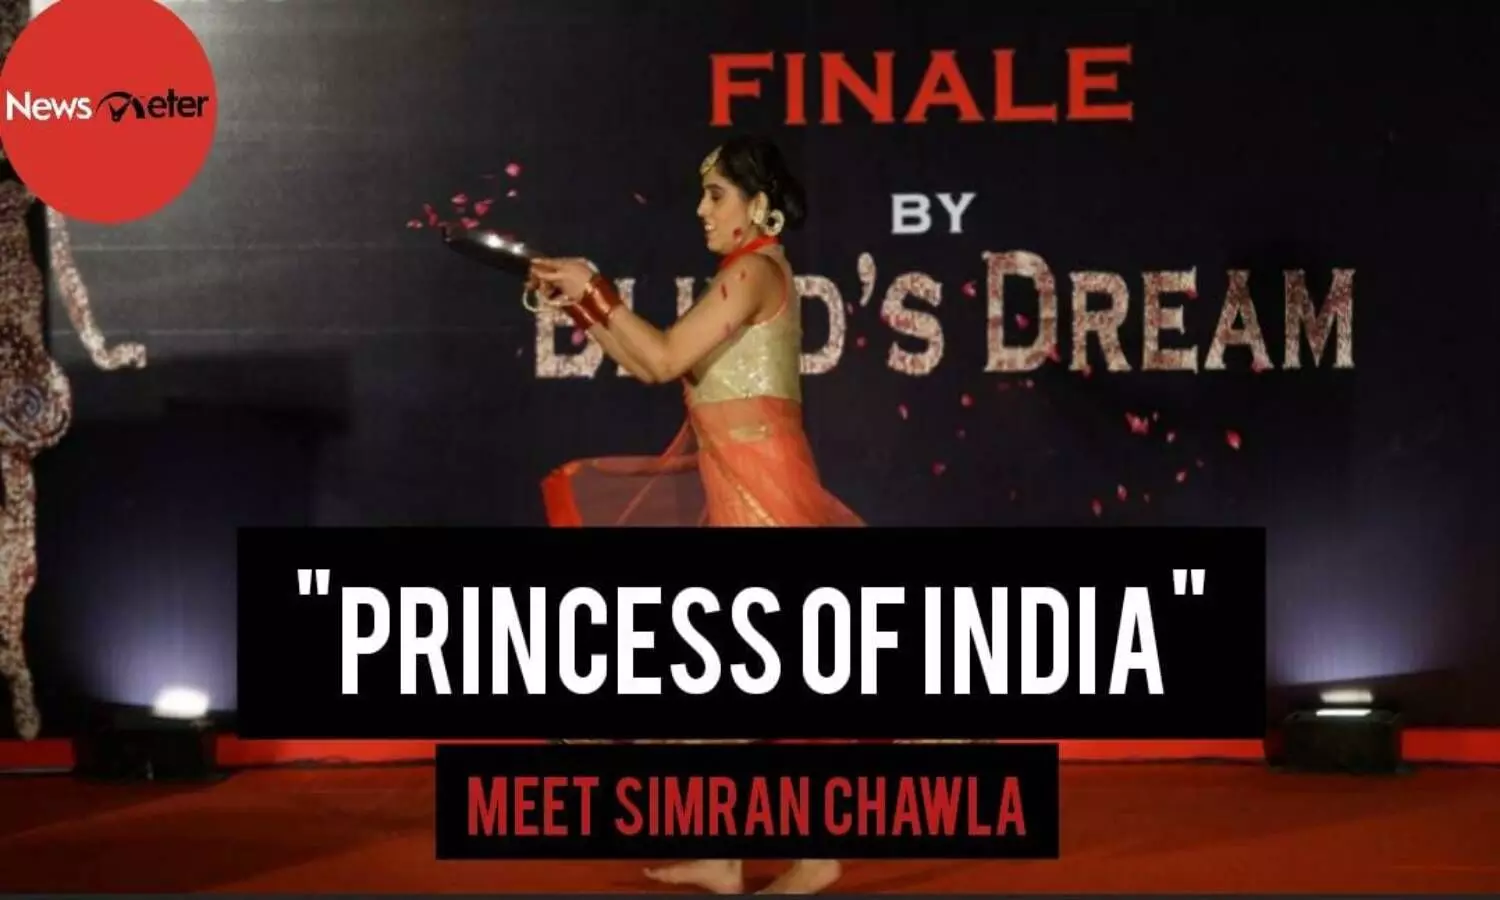 Princess of India meet Simran Chawla the girl who writes her own destiny.